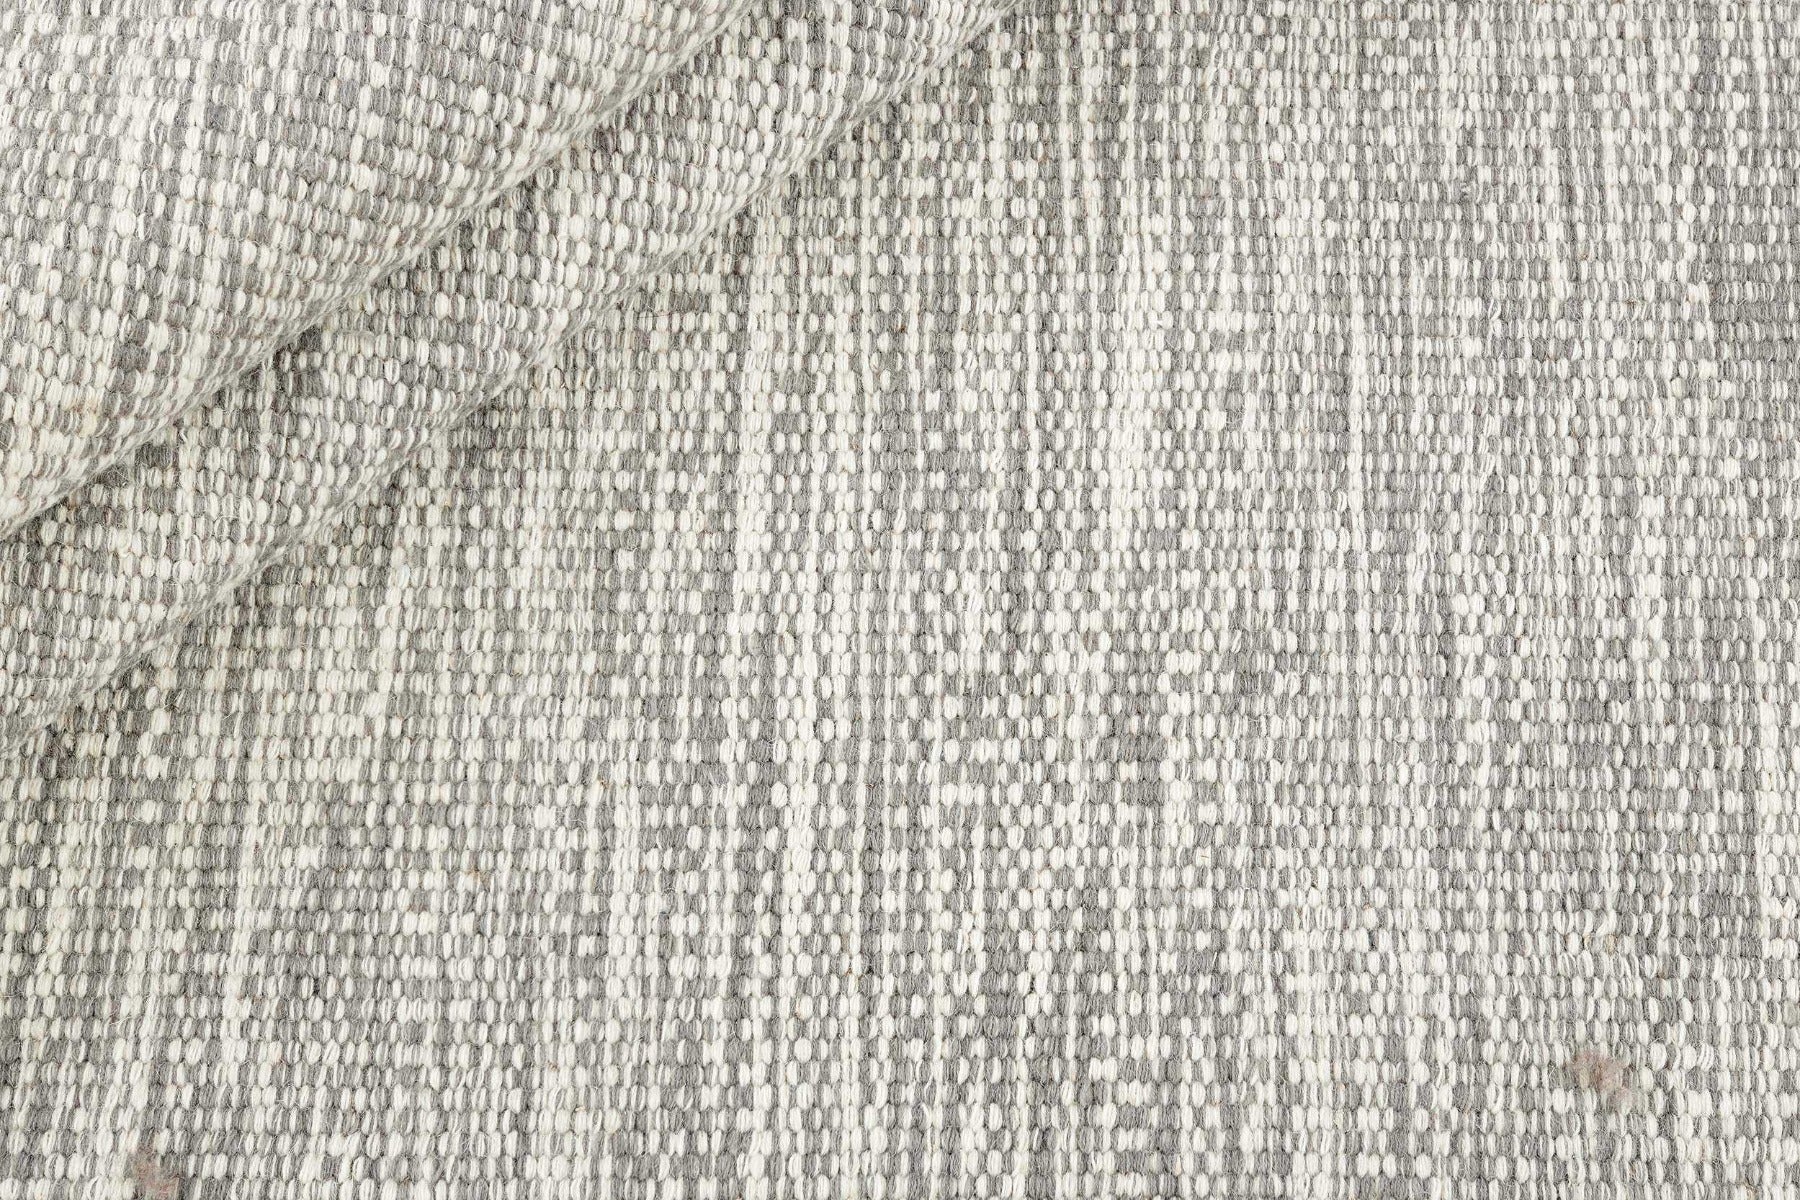 plain grey flatweave area rug
